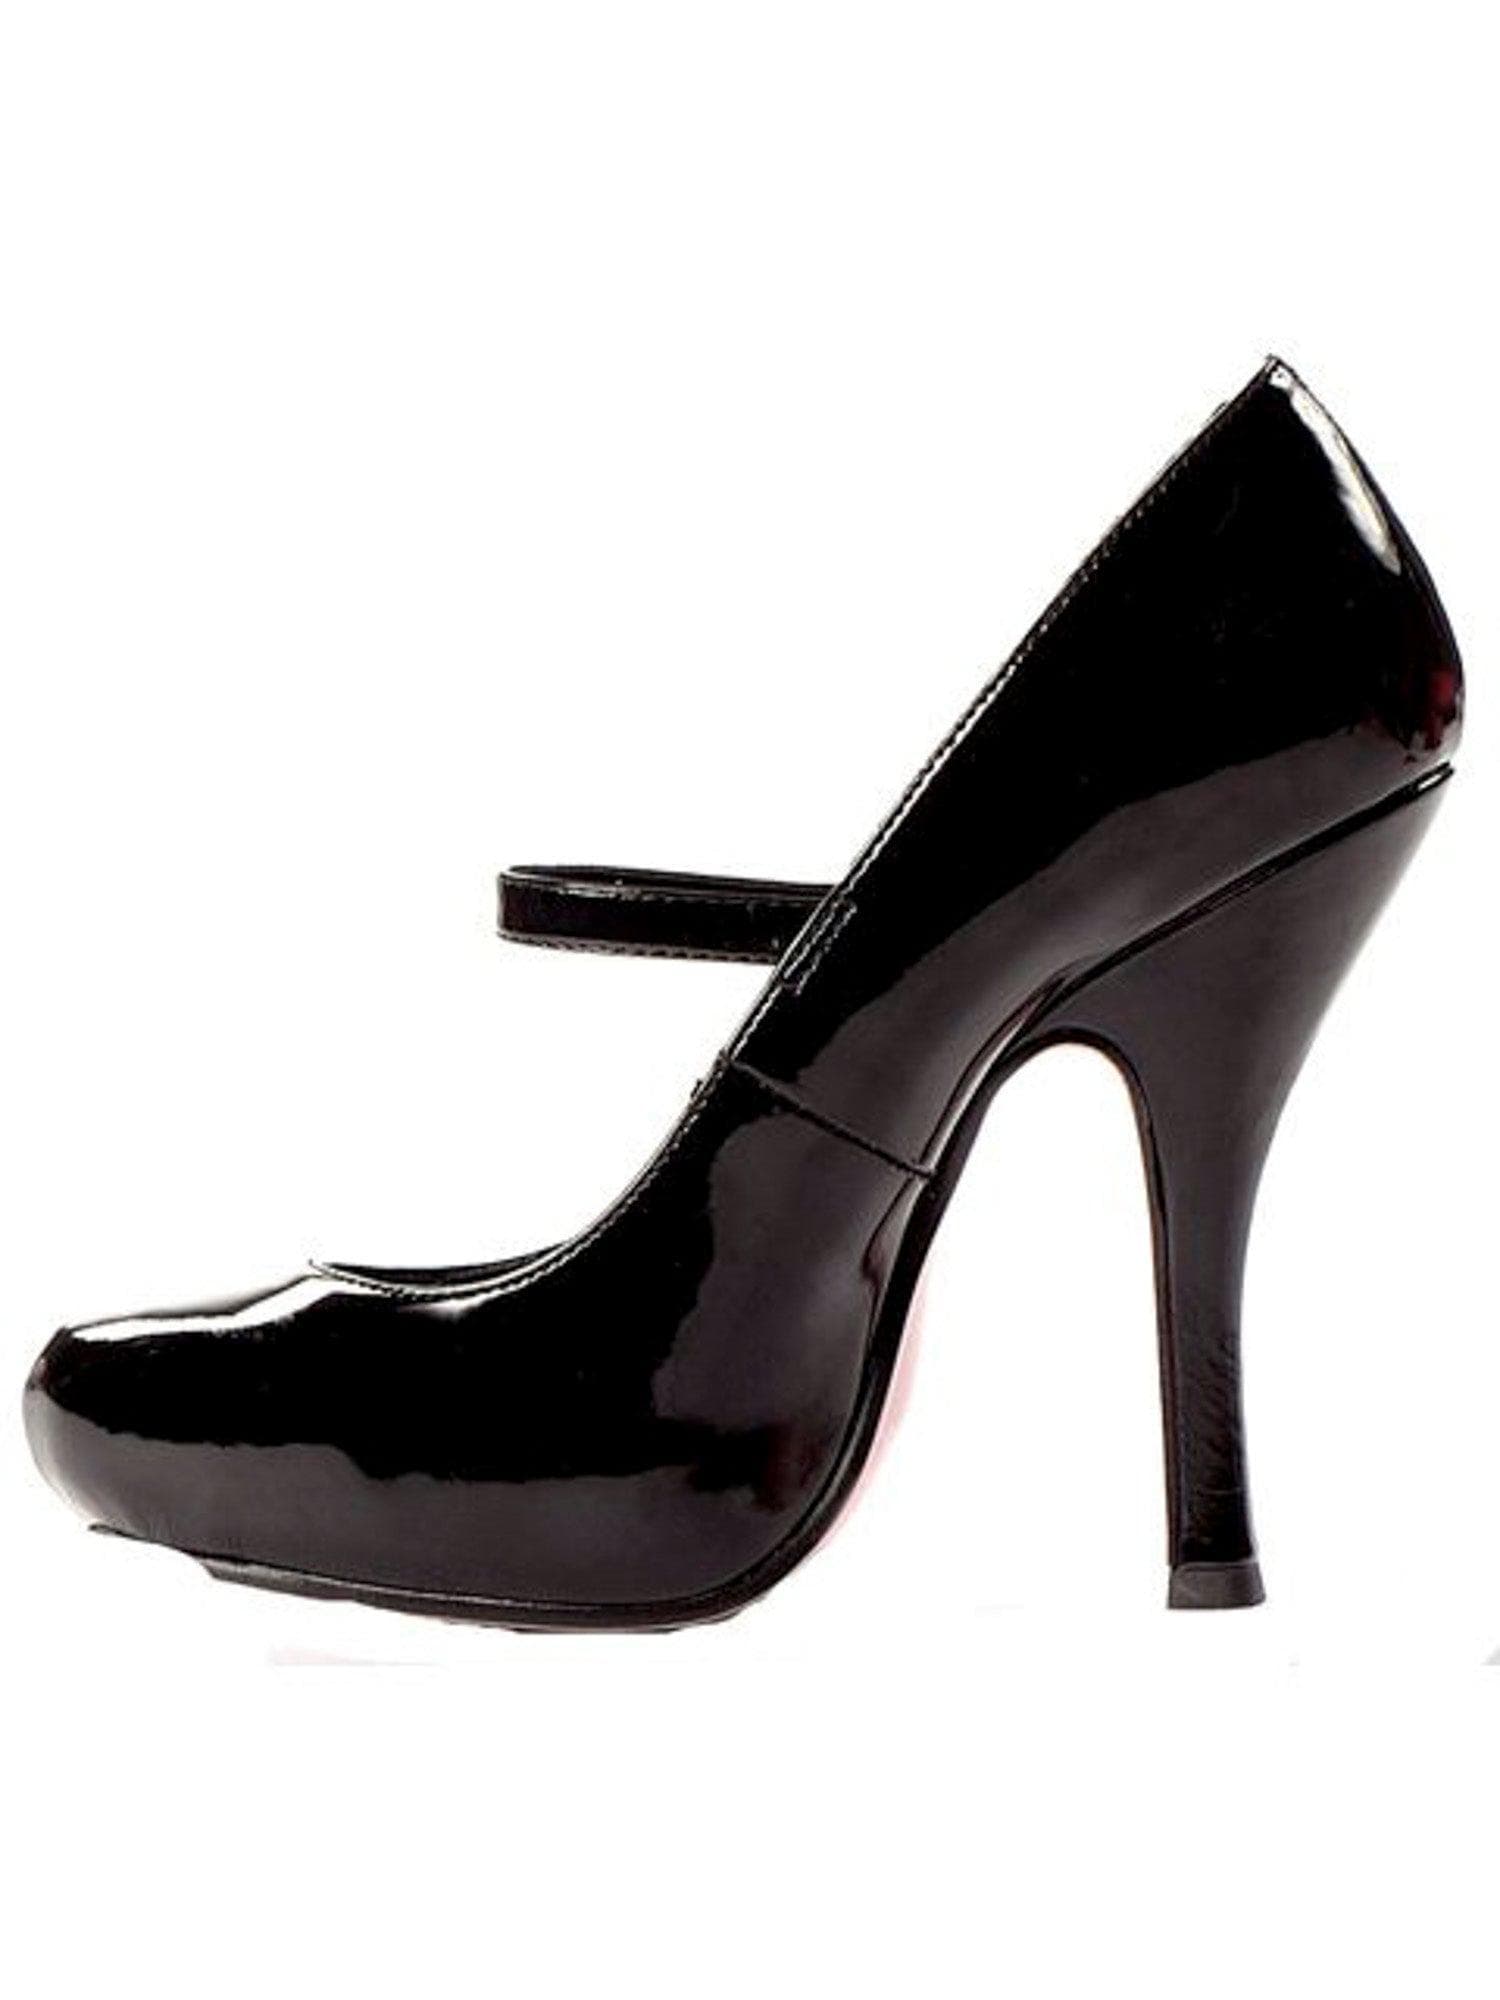 Adult Black Patent Heeled Maryjane Shoes - costumes.com